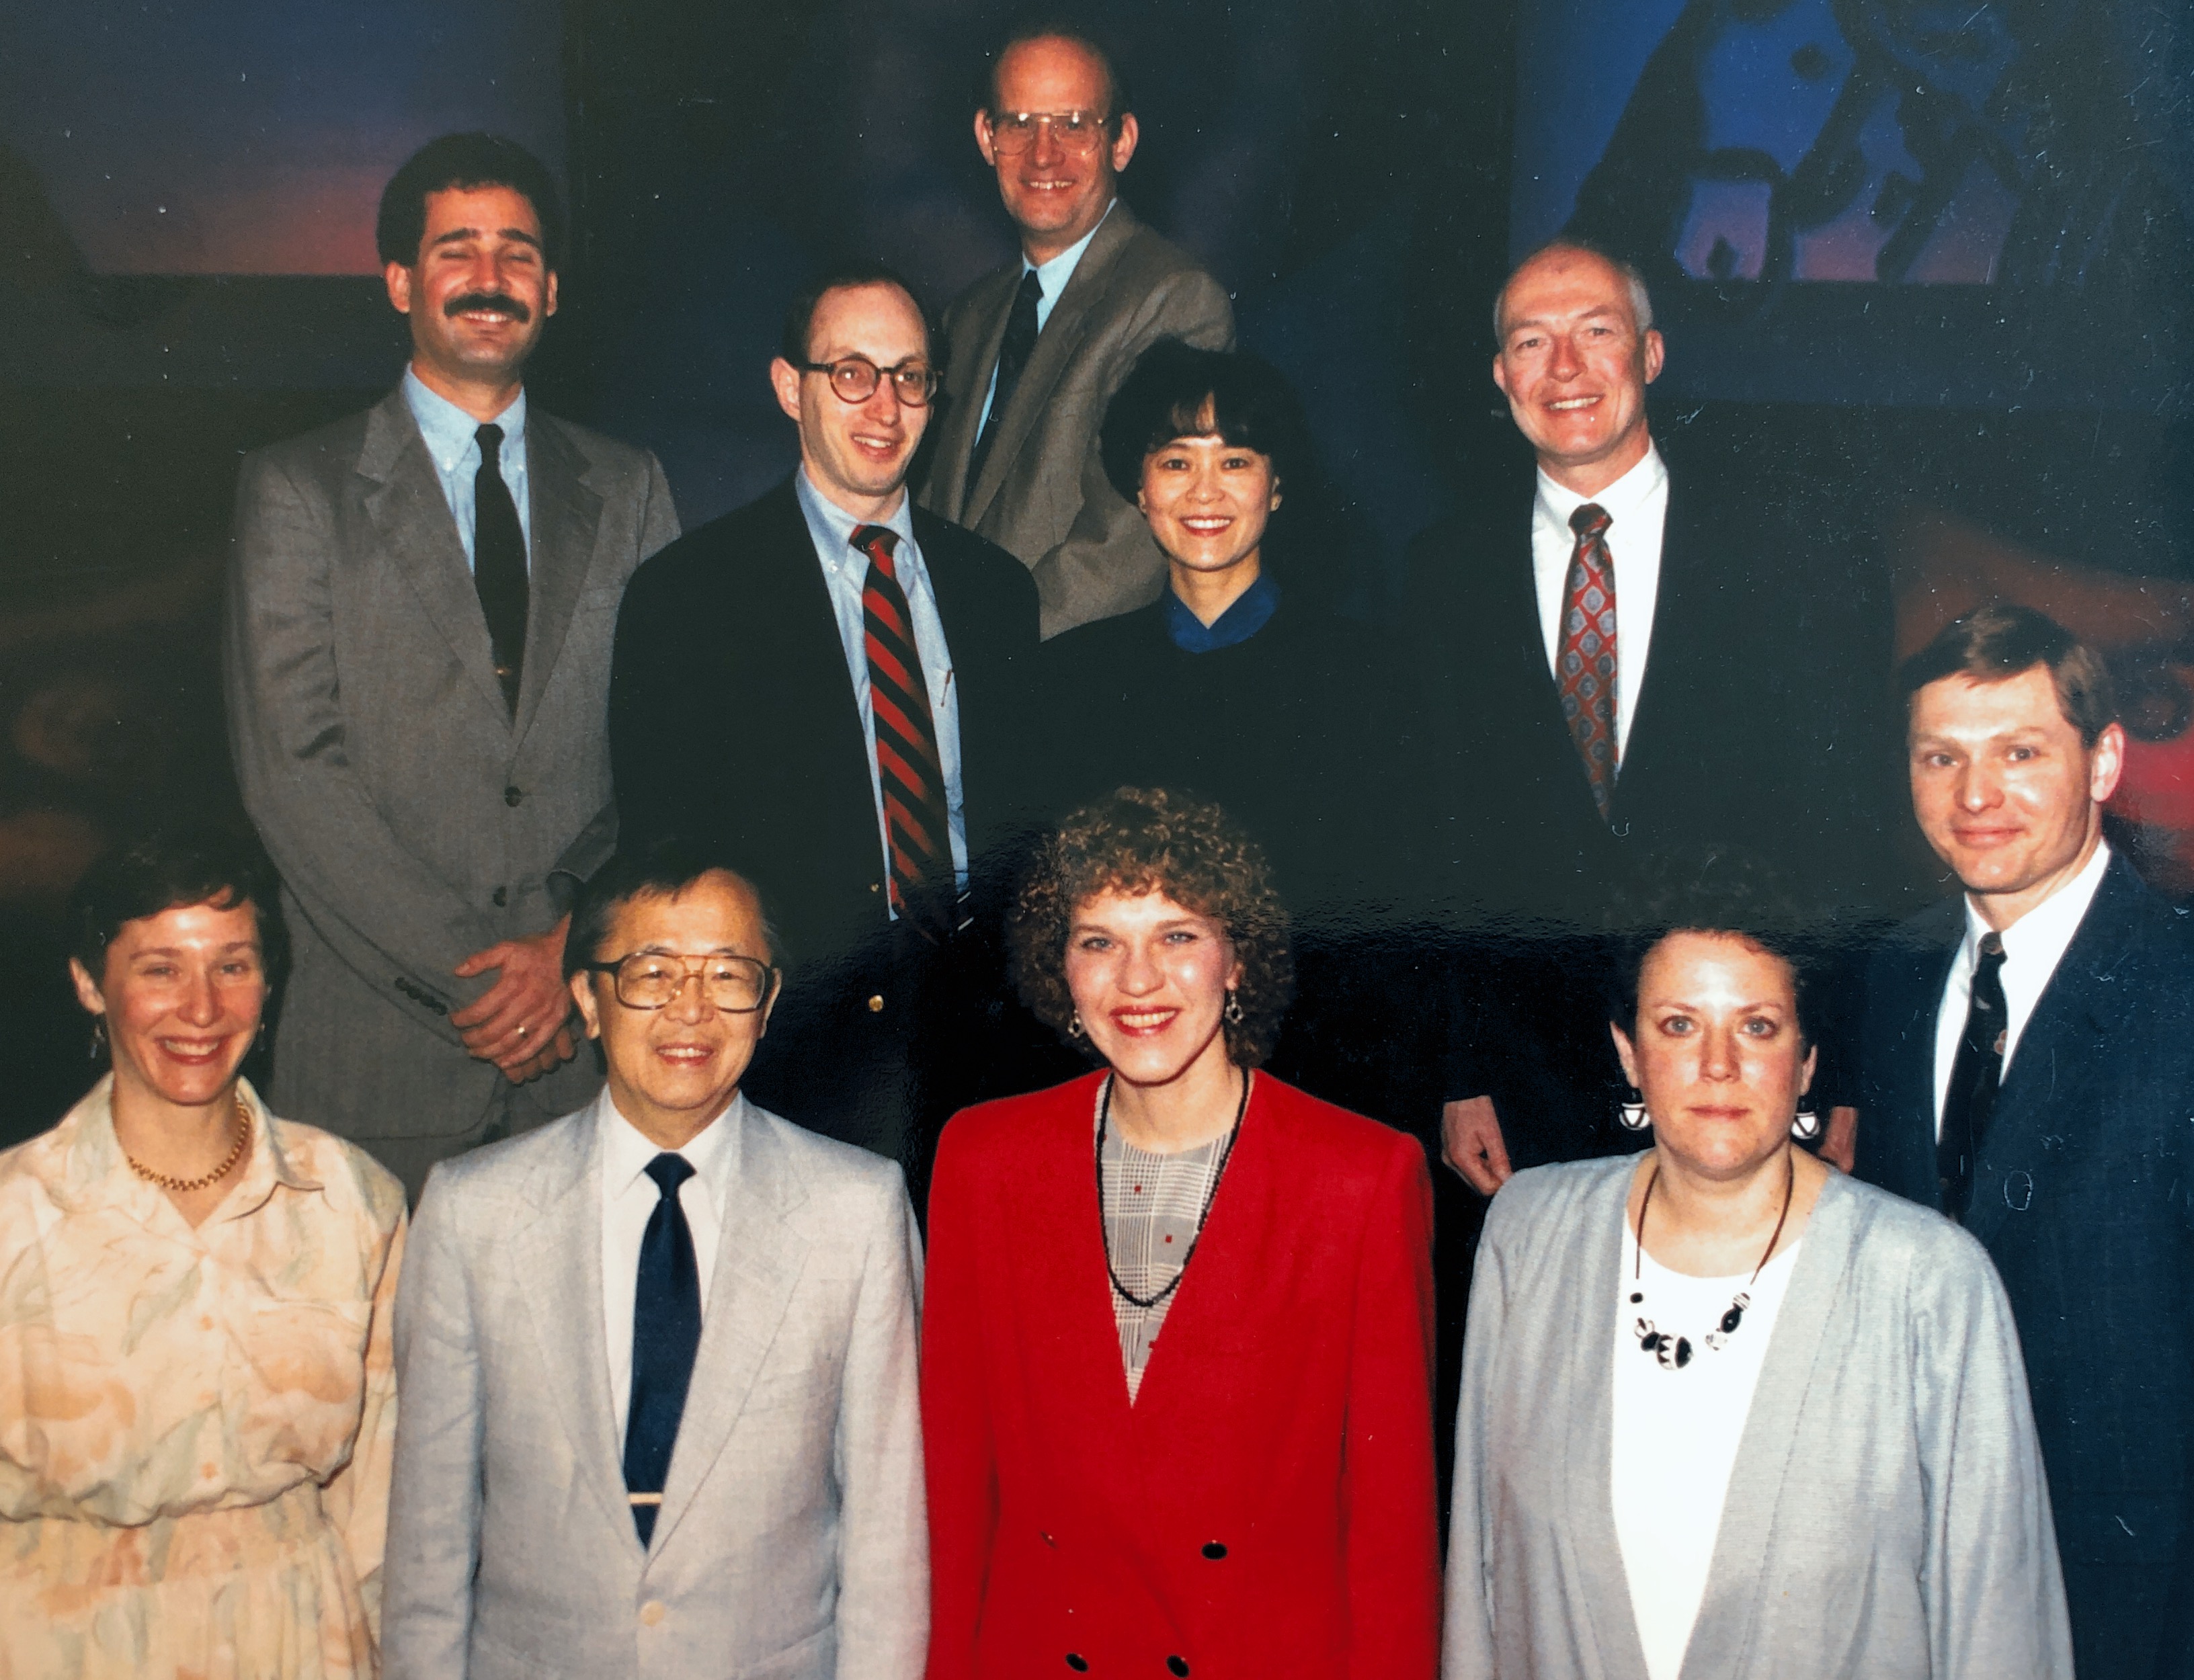 Zoloft development team for launch in 1991